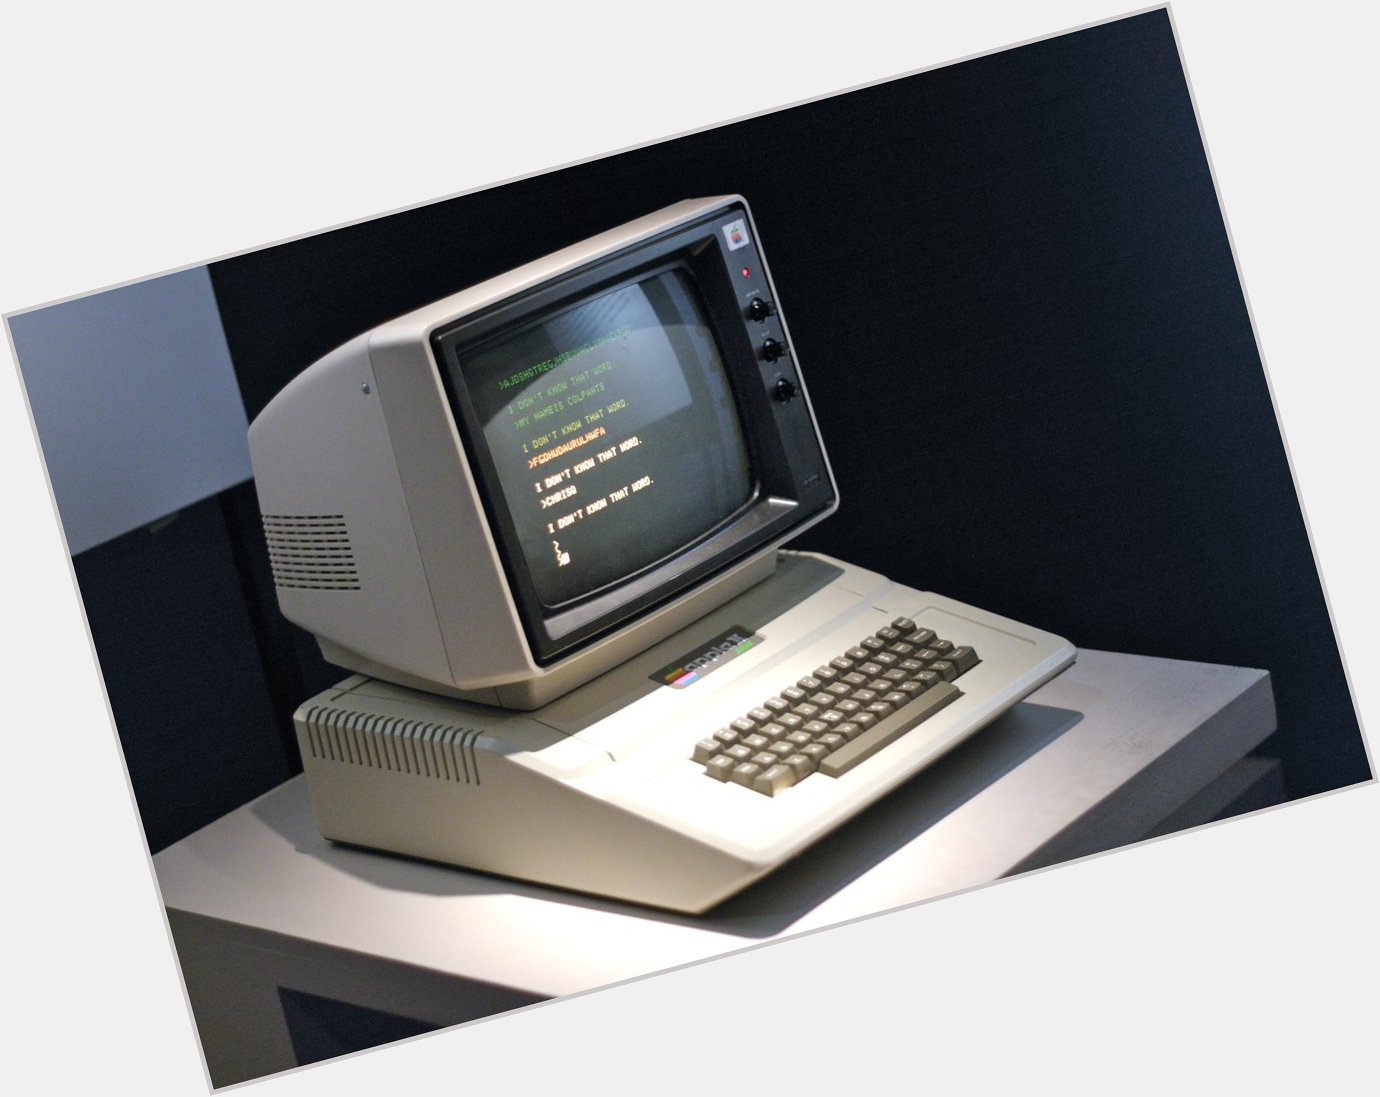 Happy birthday to Steve Wozniak, inventor of the Apple II computer.  